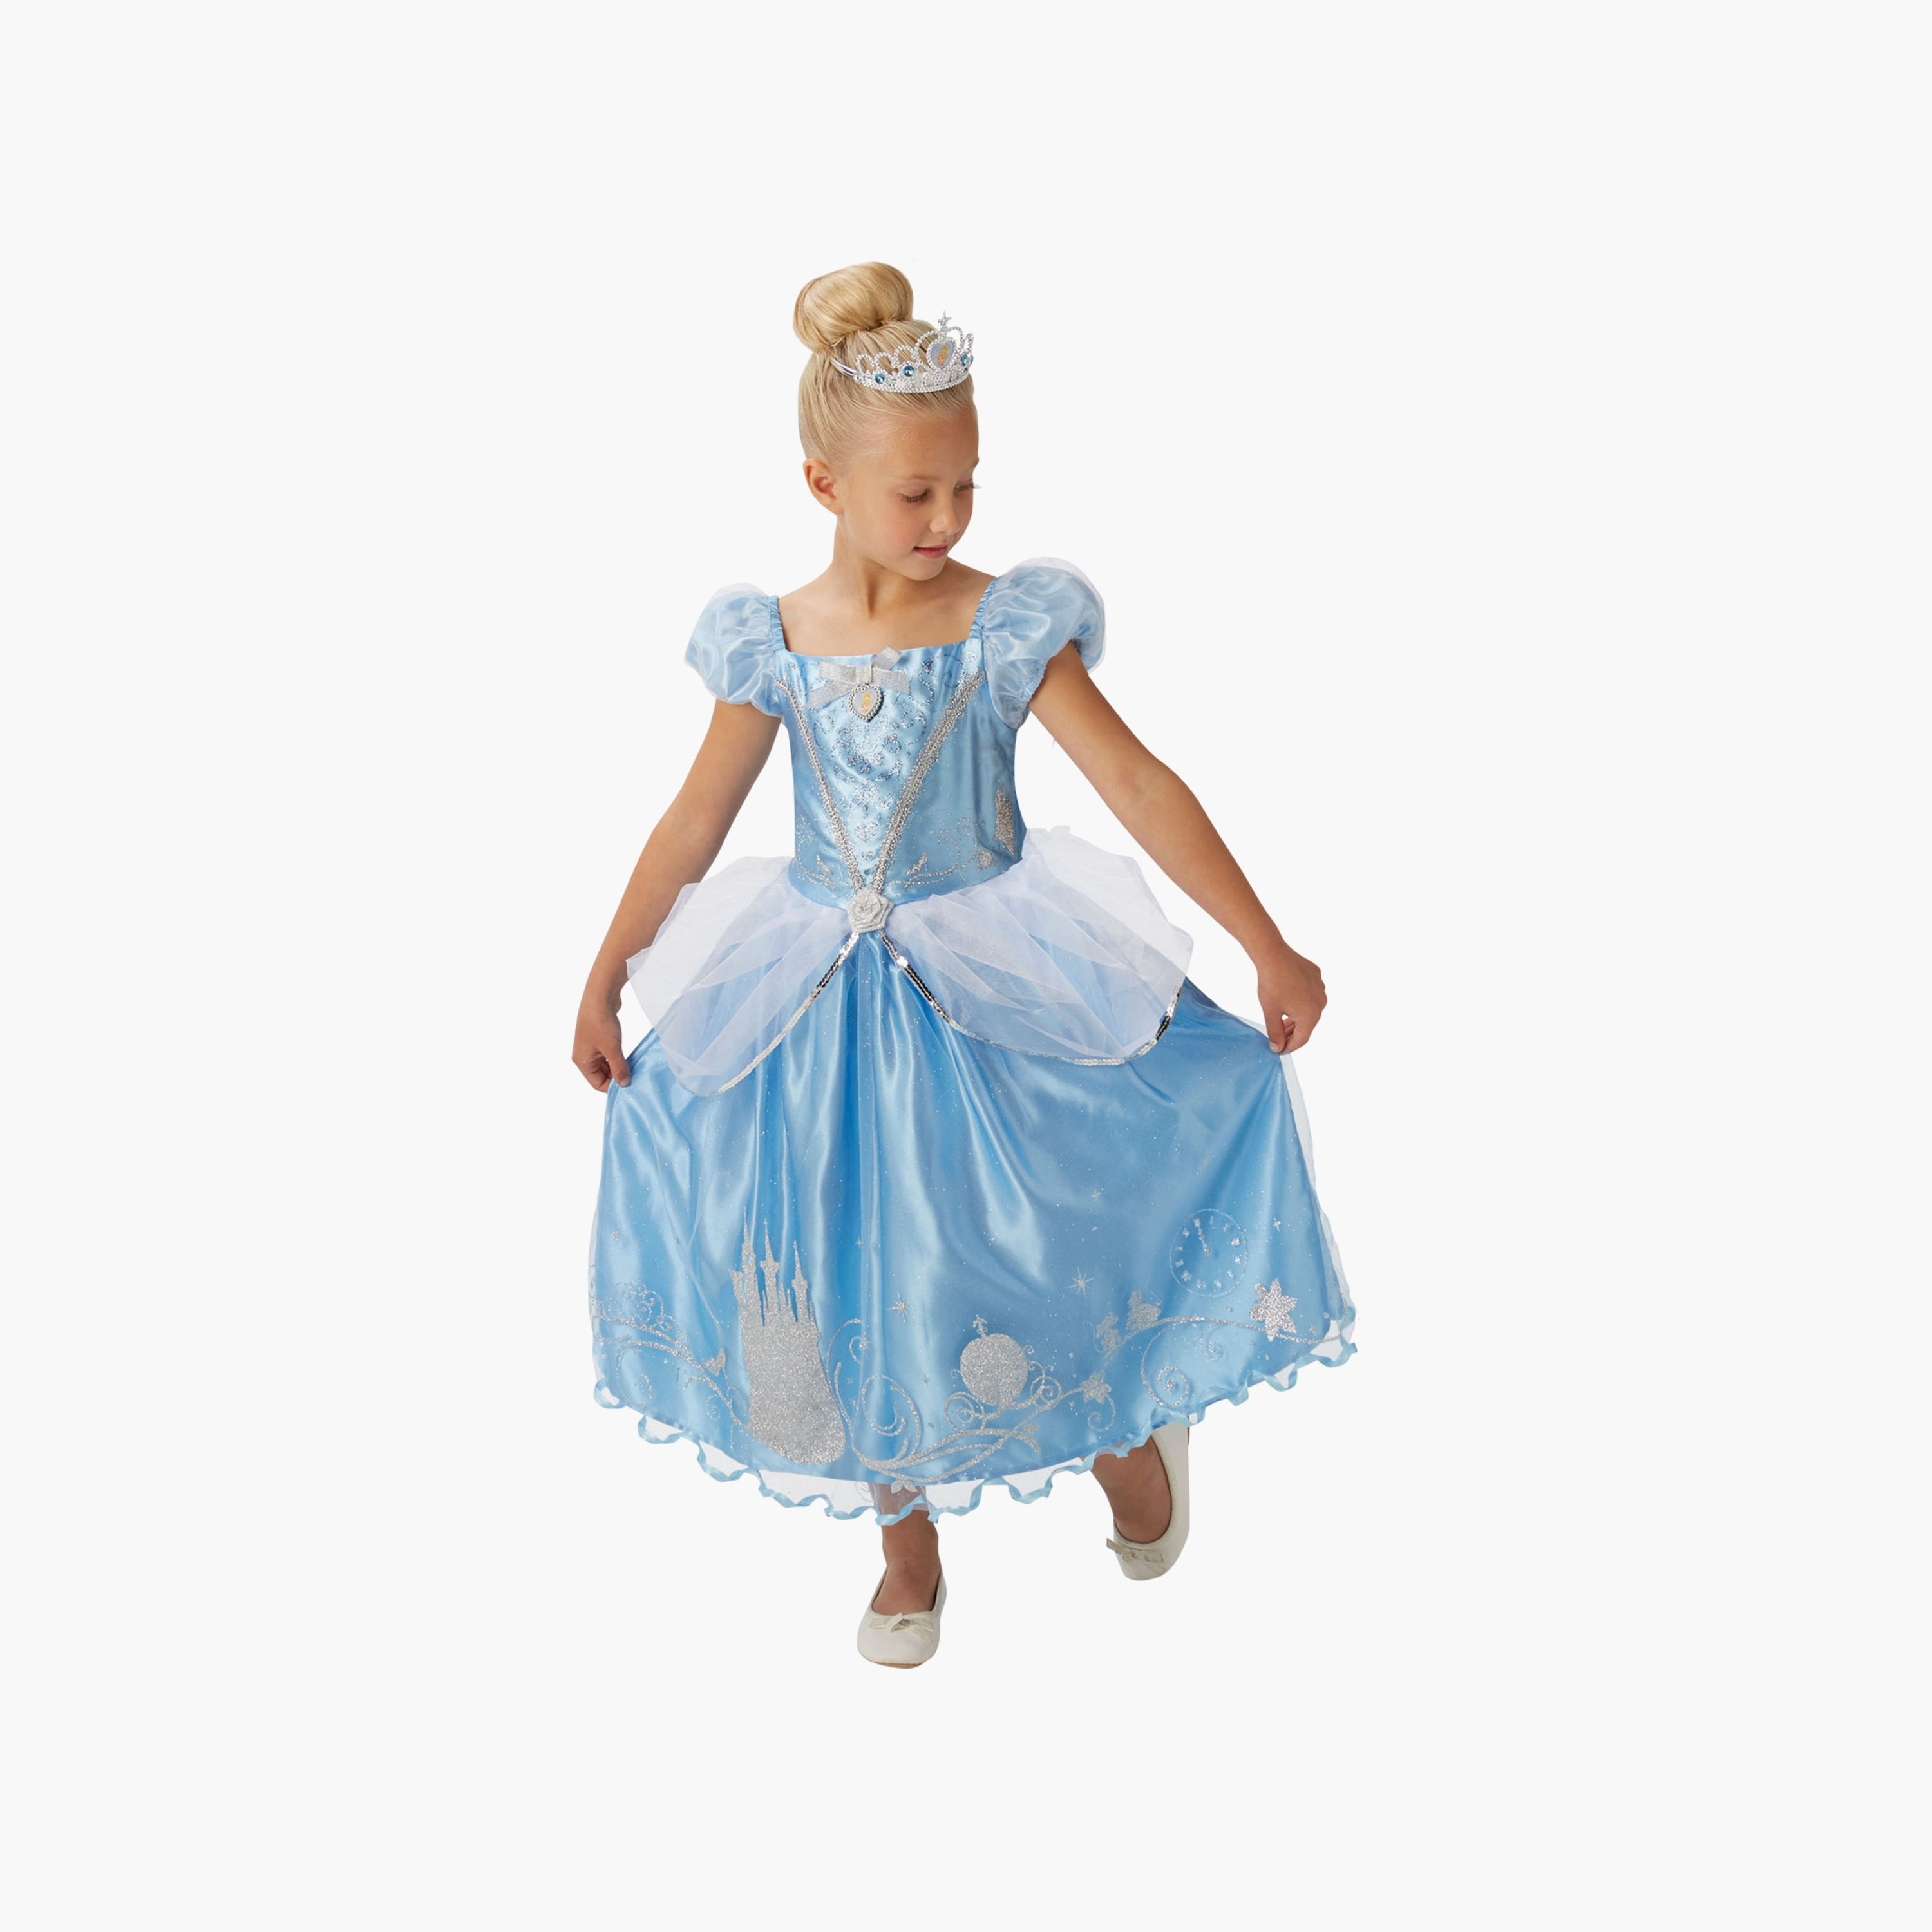 Disney Princess Costumes for Adults & Kids | Disney Princess Dresses